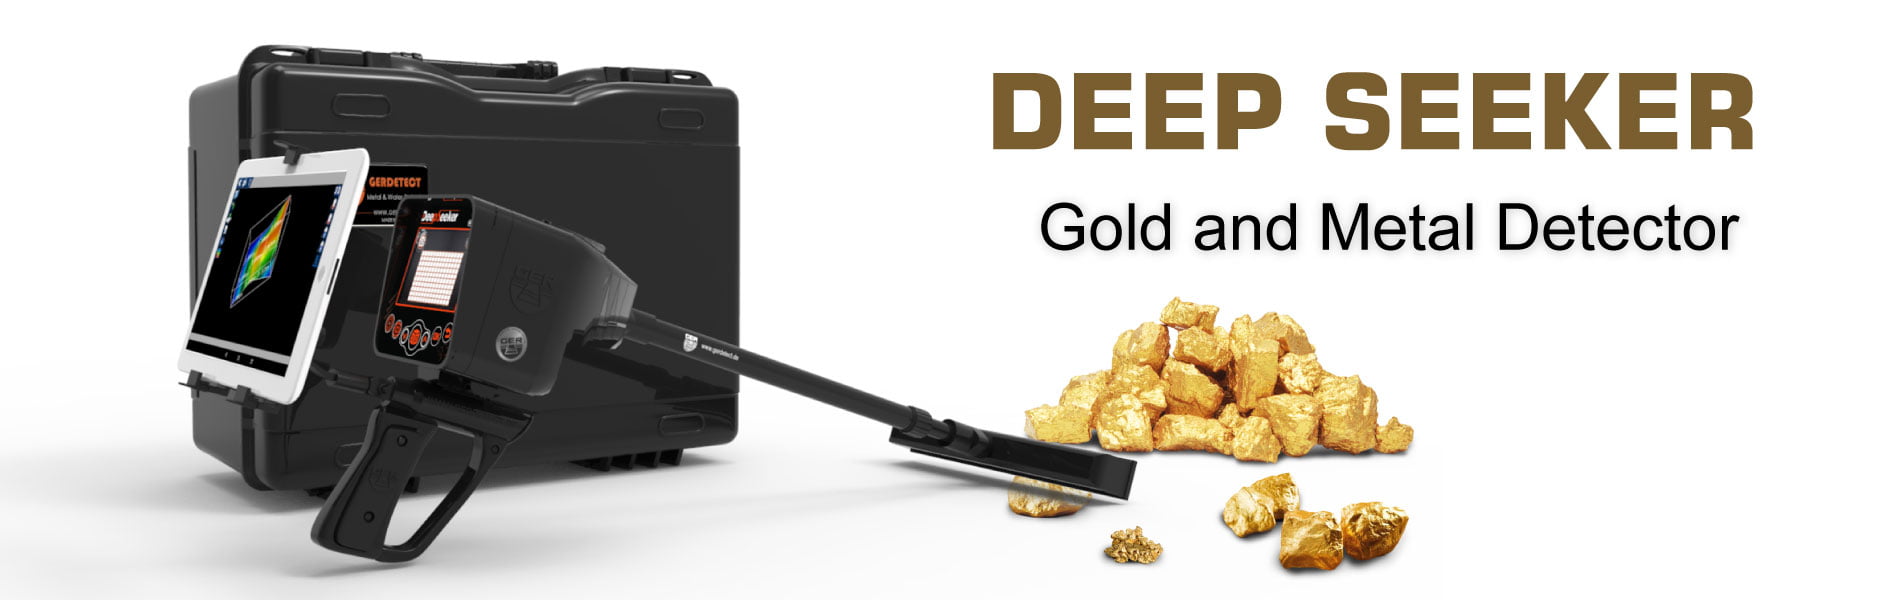 deep-seeker-device-latest-gold-metal-detector